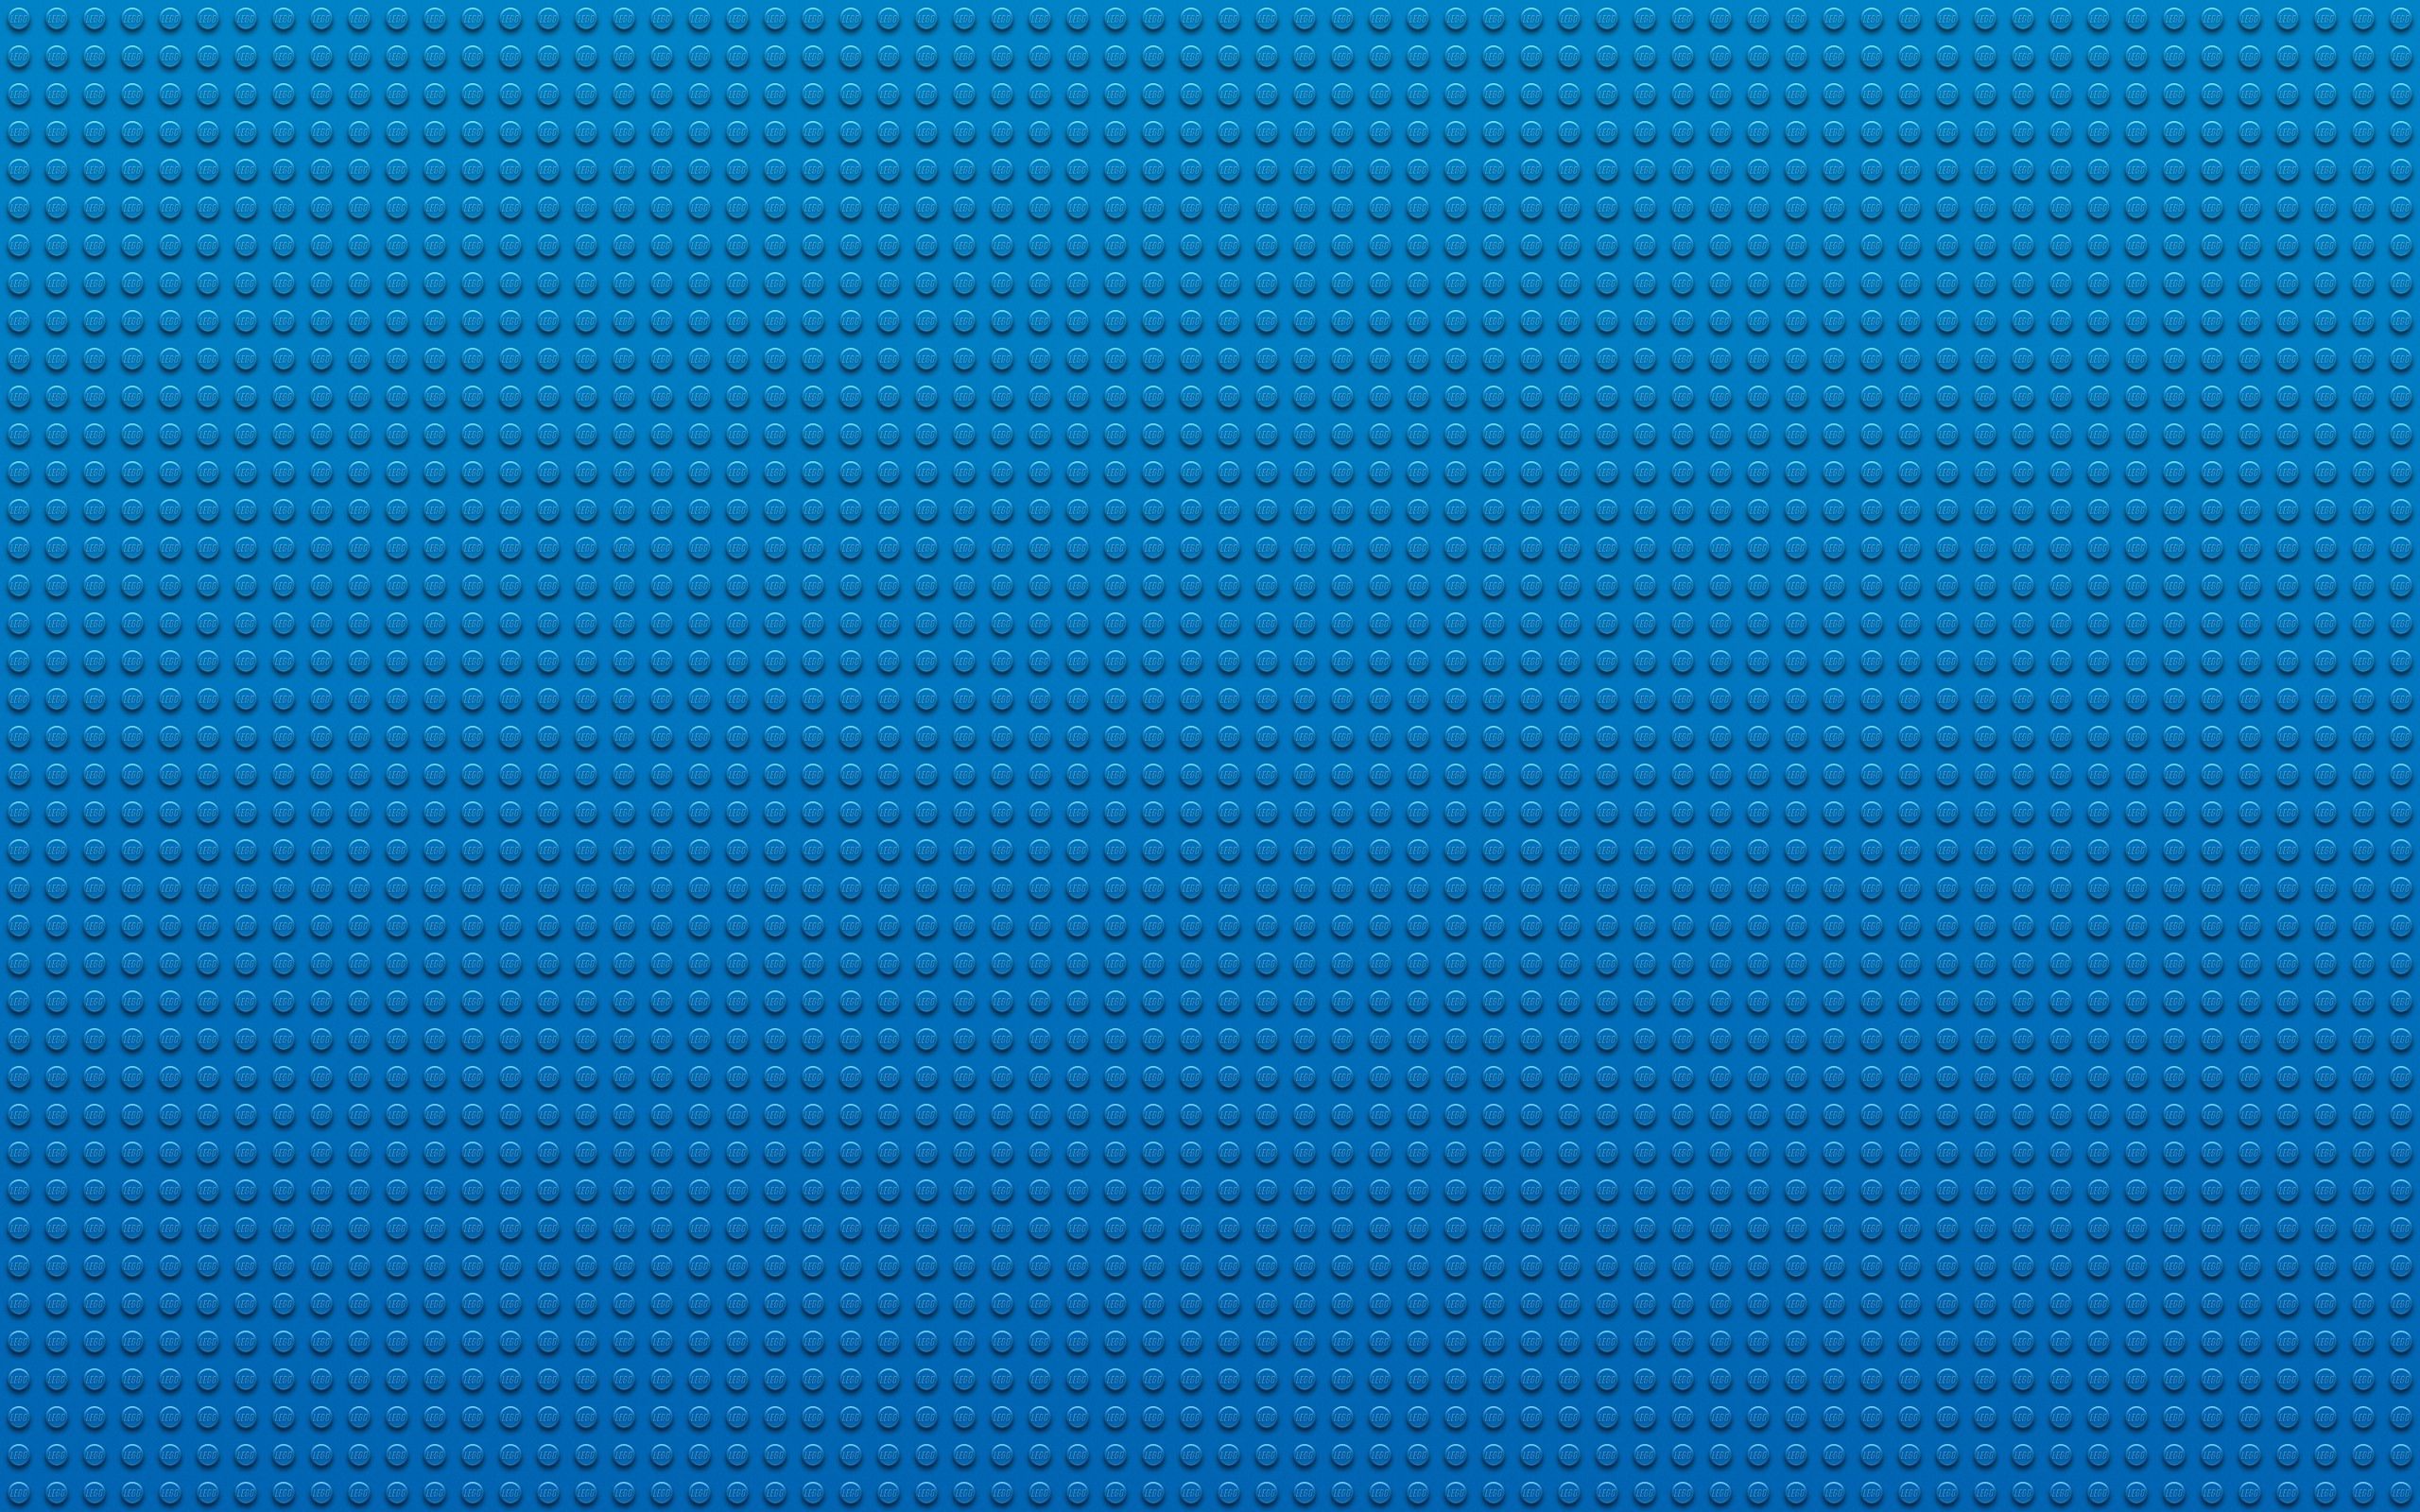 Lego Lock Screen Wallpaper